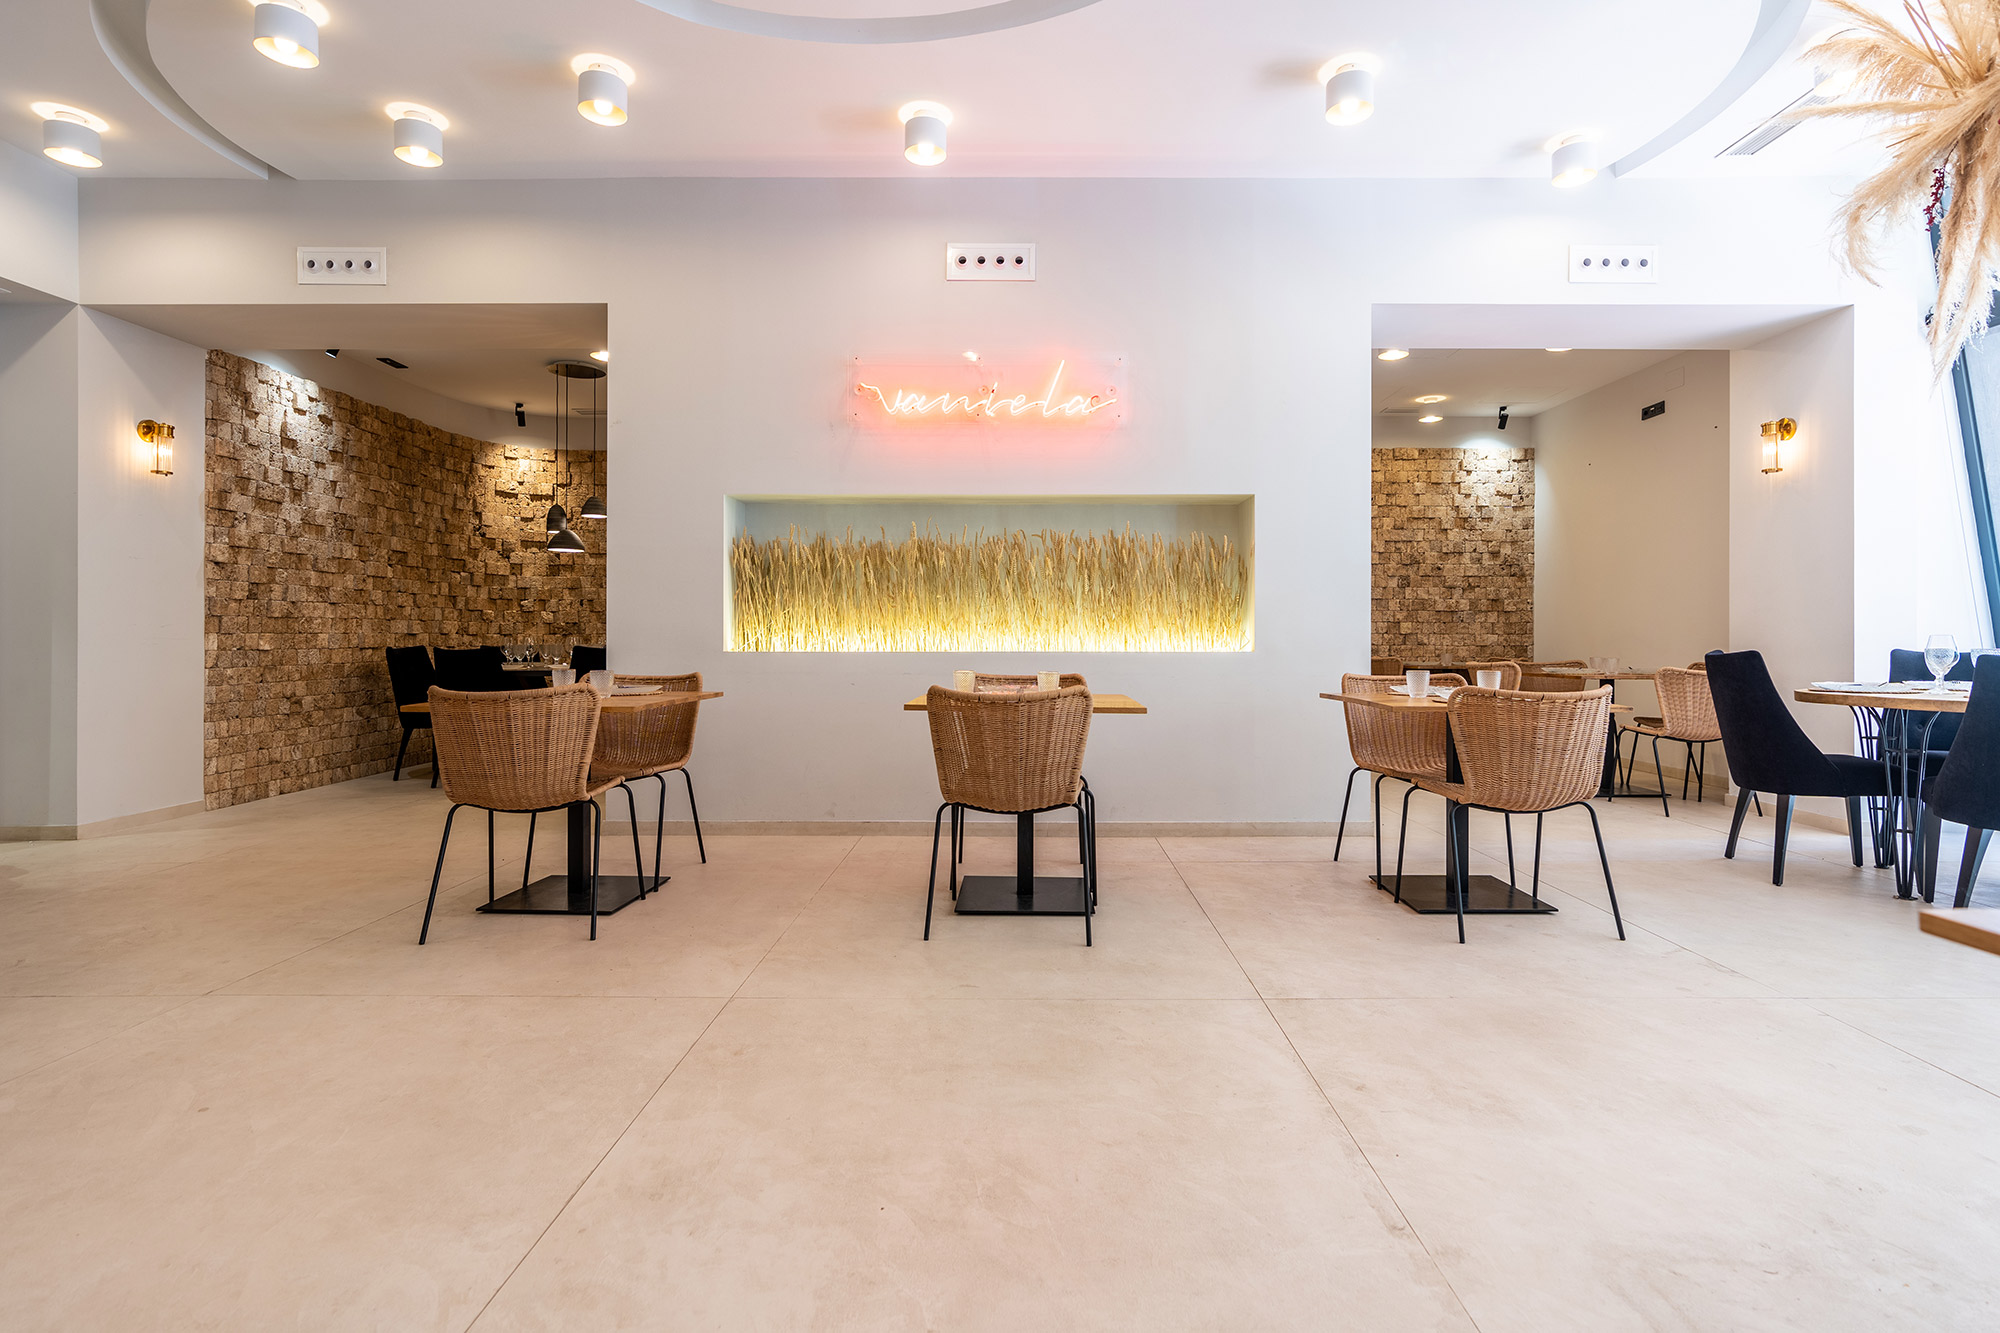 Image of restaurante vaniela dekton sala 2 in The Mediterranean inspiration of the Kraftizen by Dekton collection as a partner of Almería’s trendiest restaurant - Cosentino